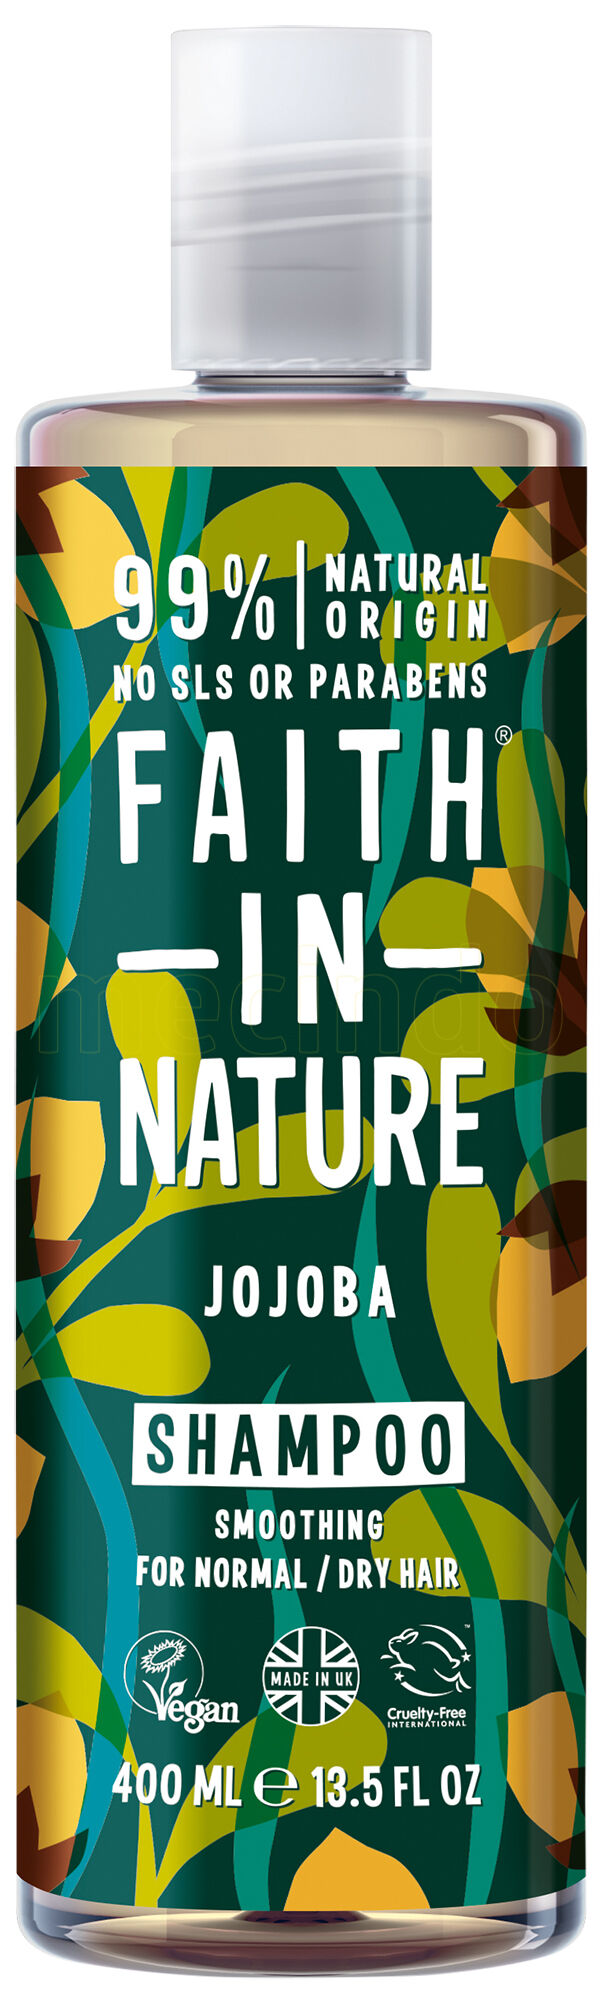 Faith in Nature Shampoo Jojoba - 400 ml